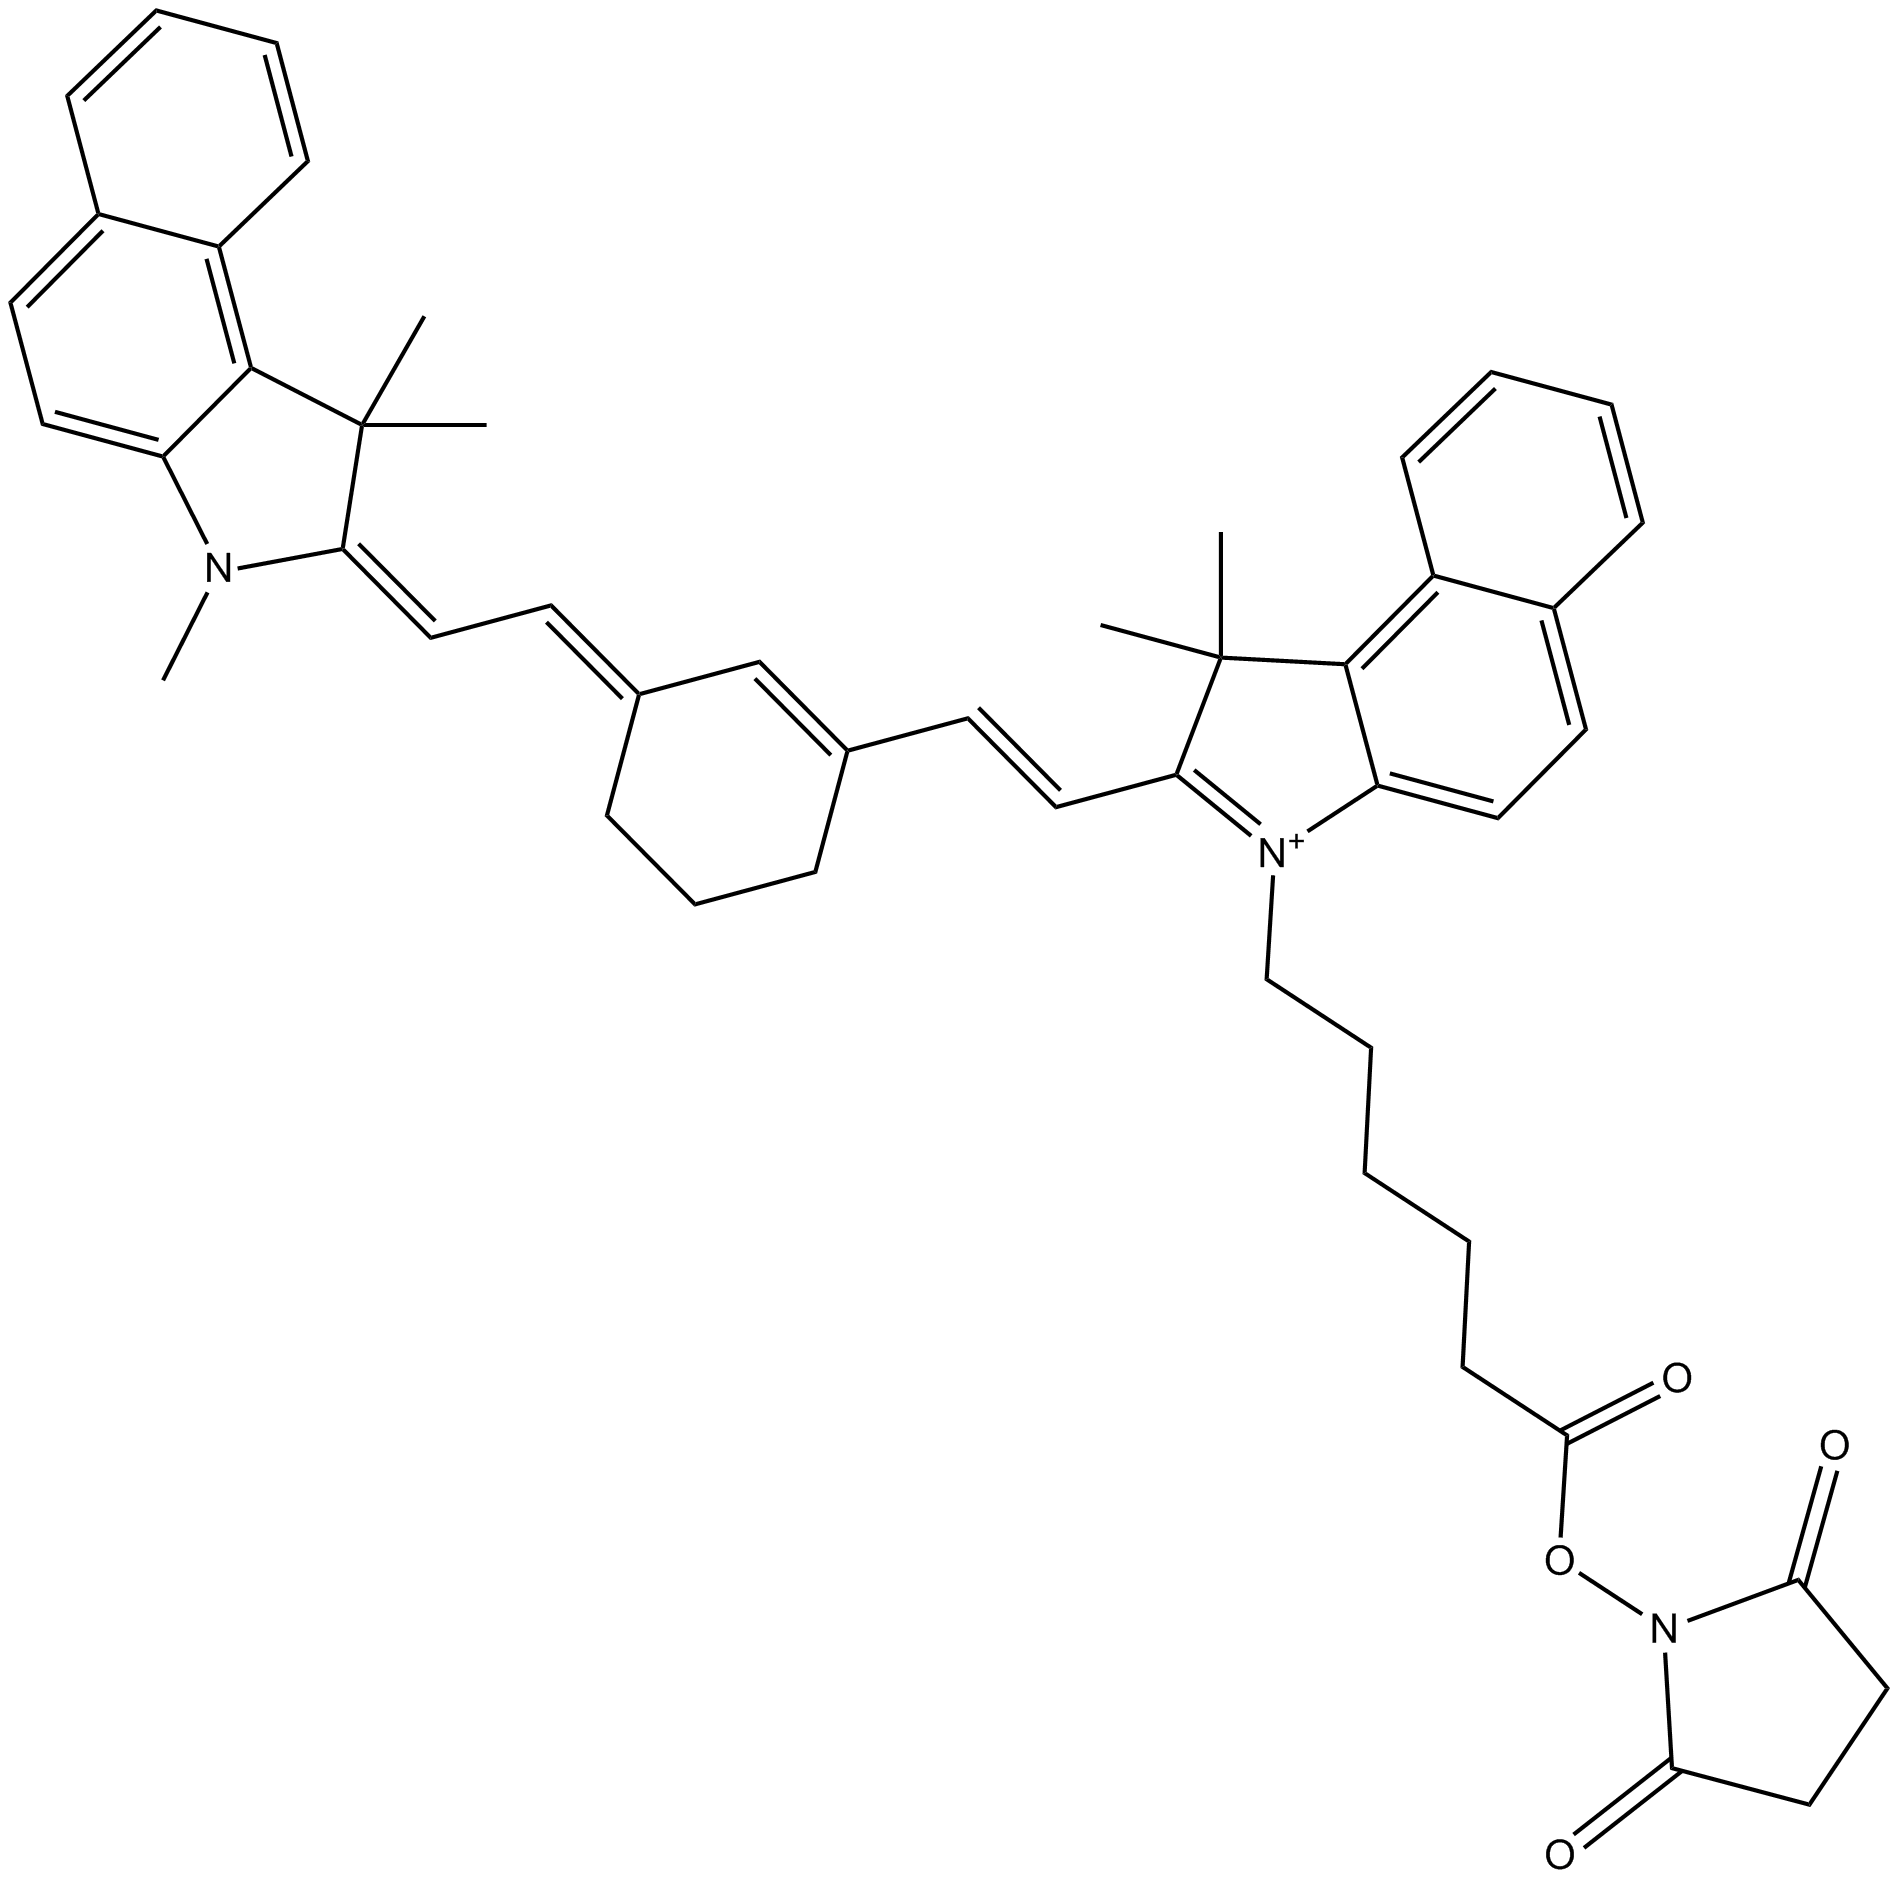 Cy7.5 NHS ester (non-sulfonated) Chemische Struktur